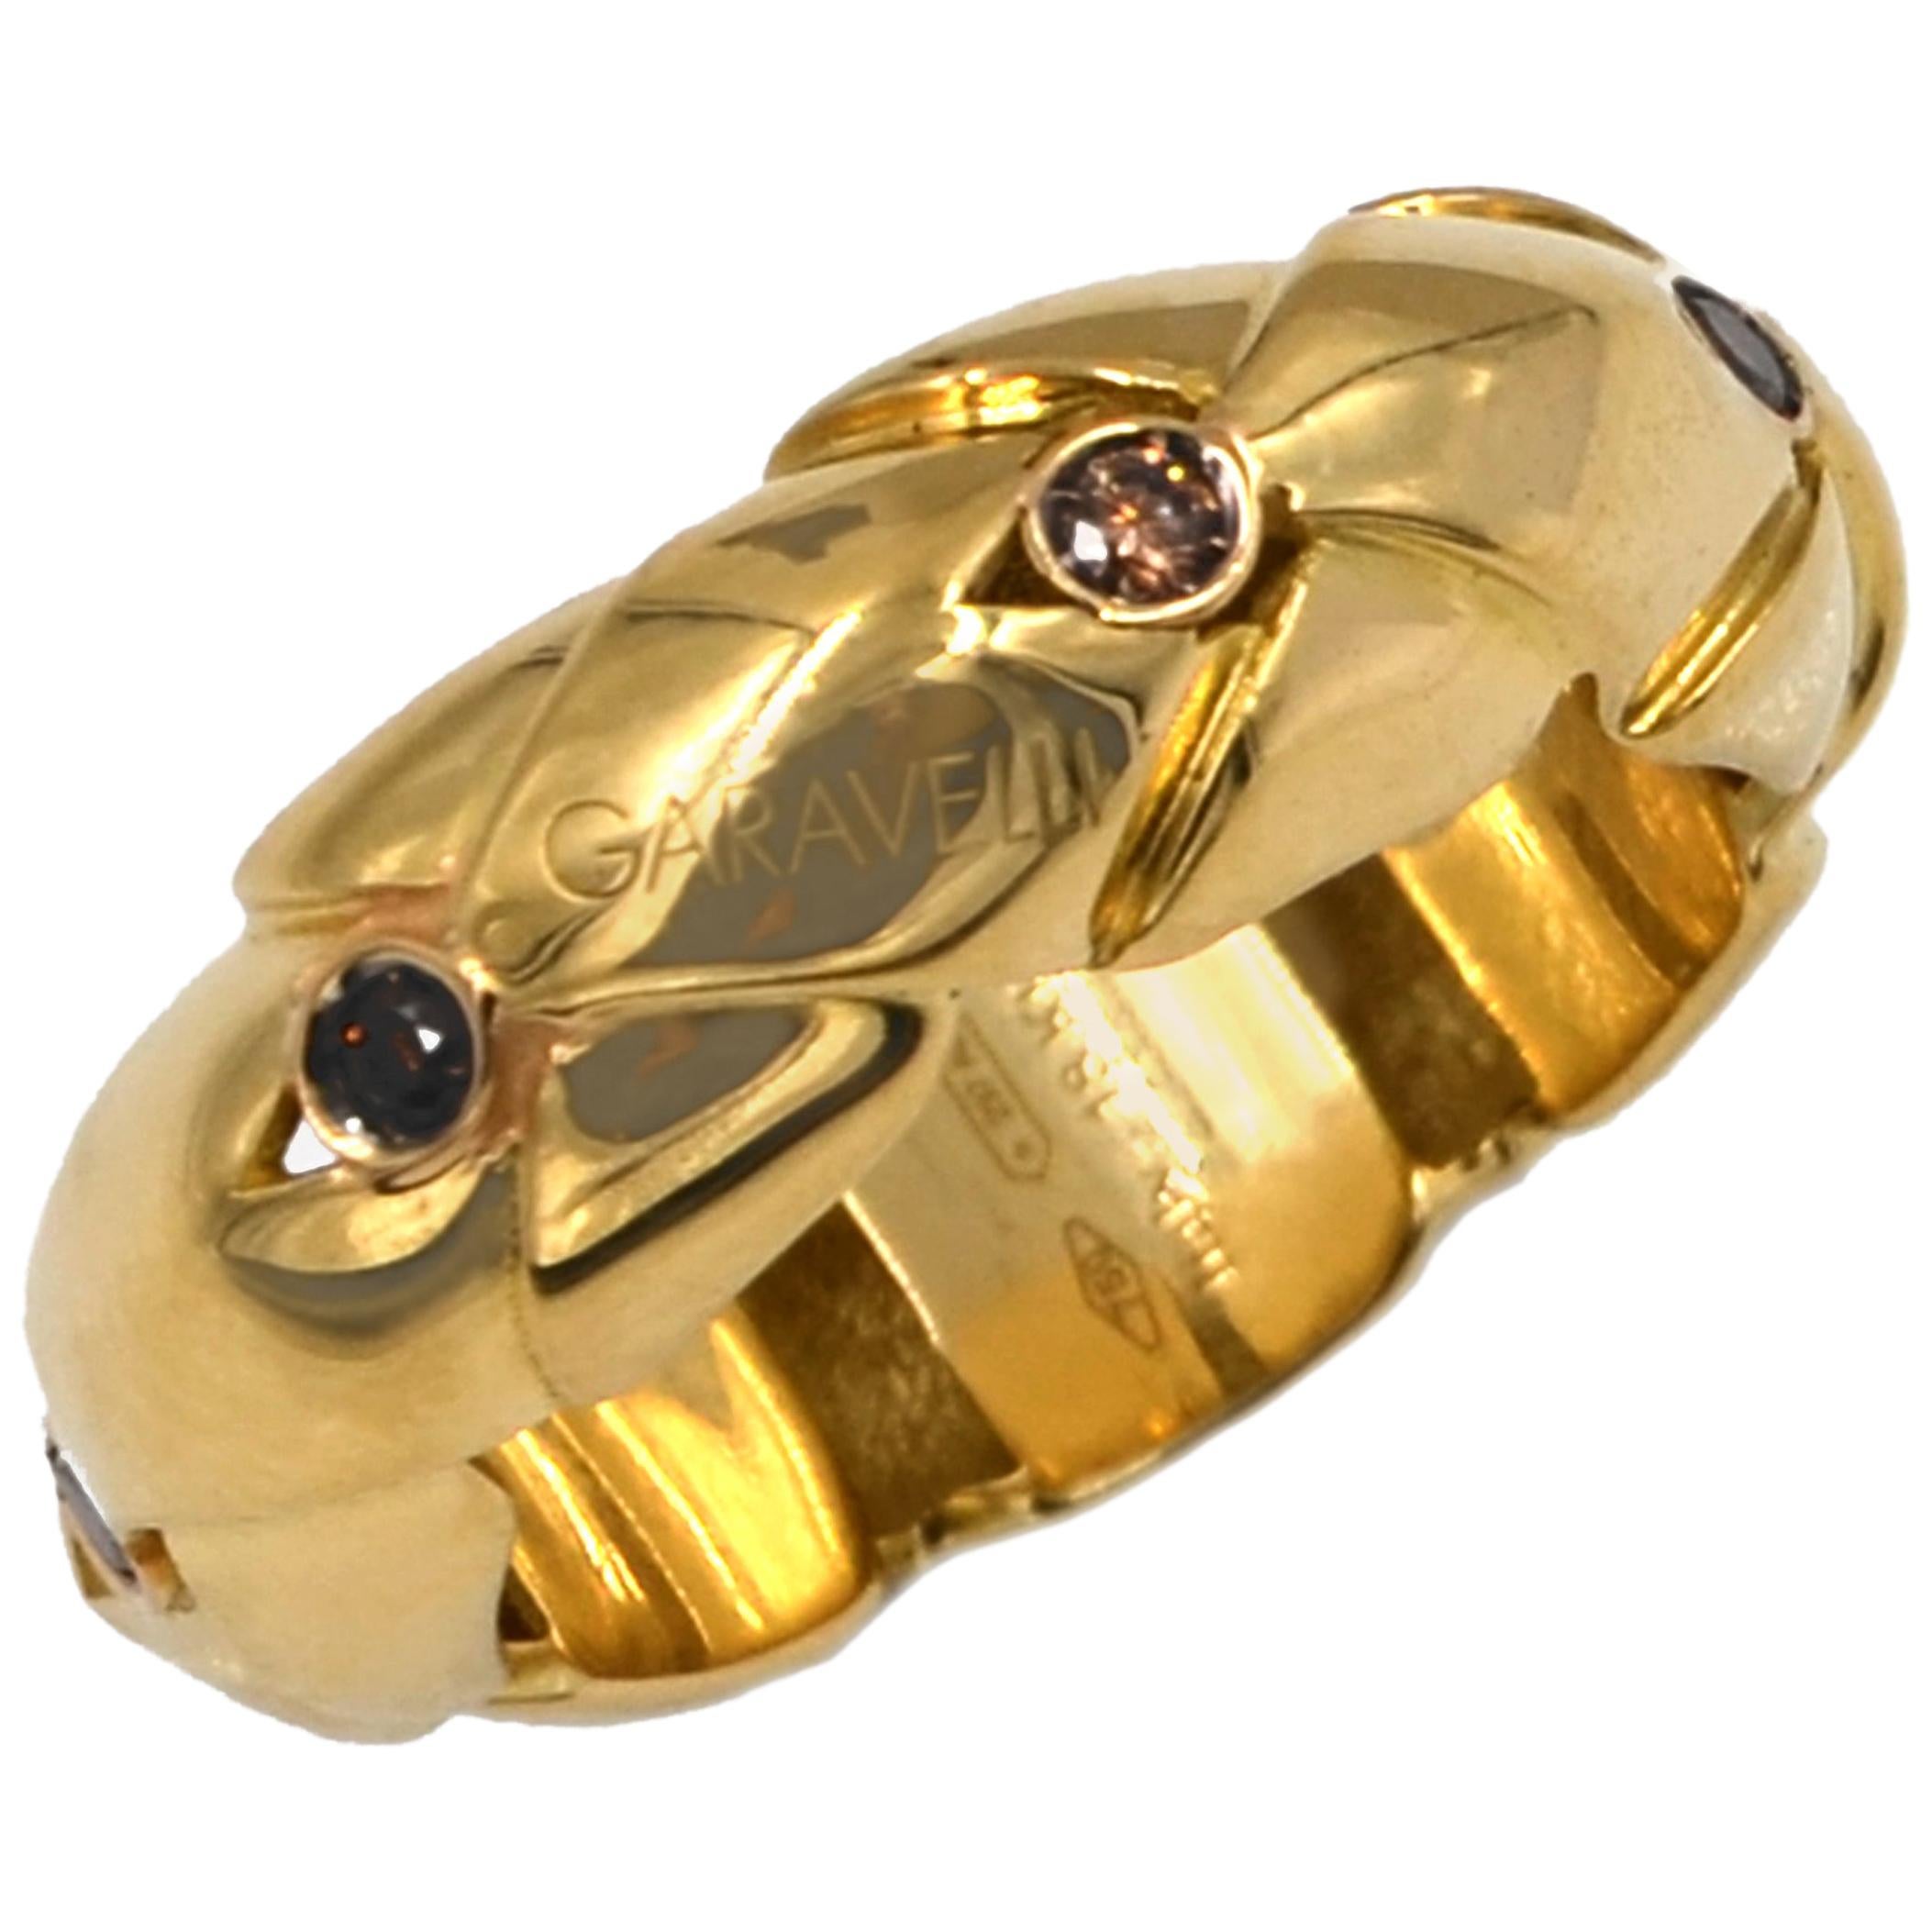 18 Karat Yellow Gold Diamond Garavelli Ring